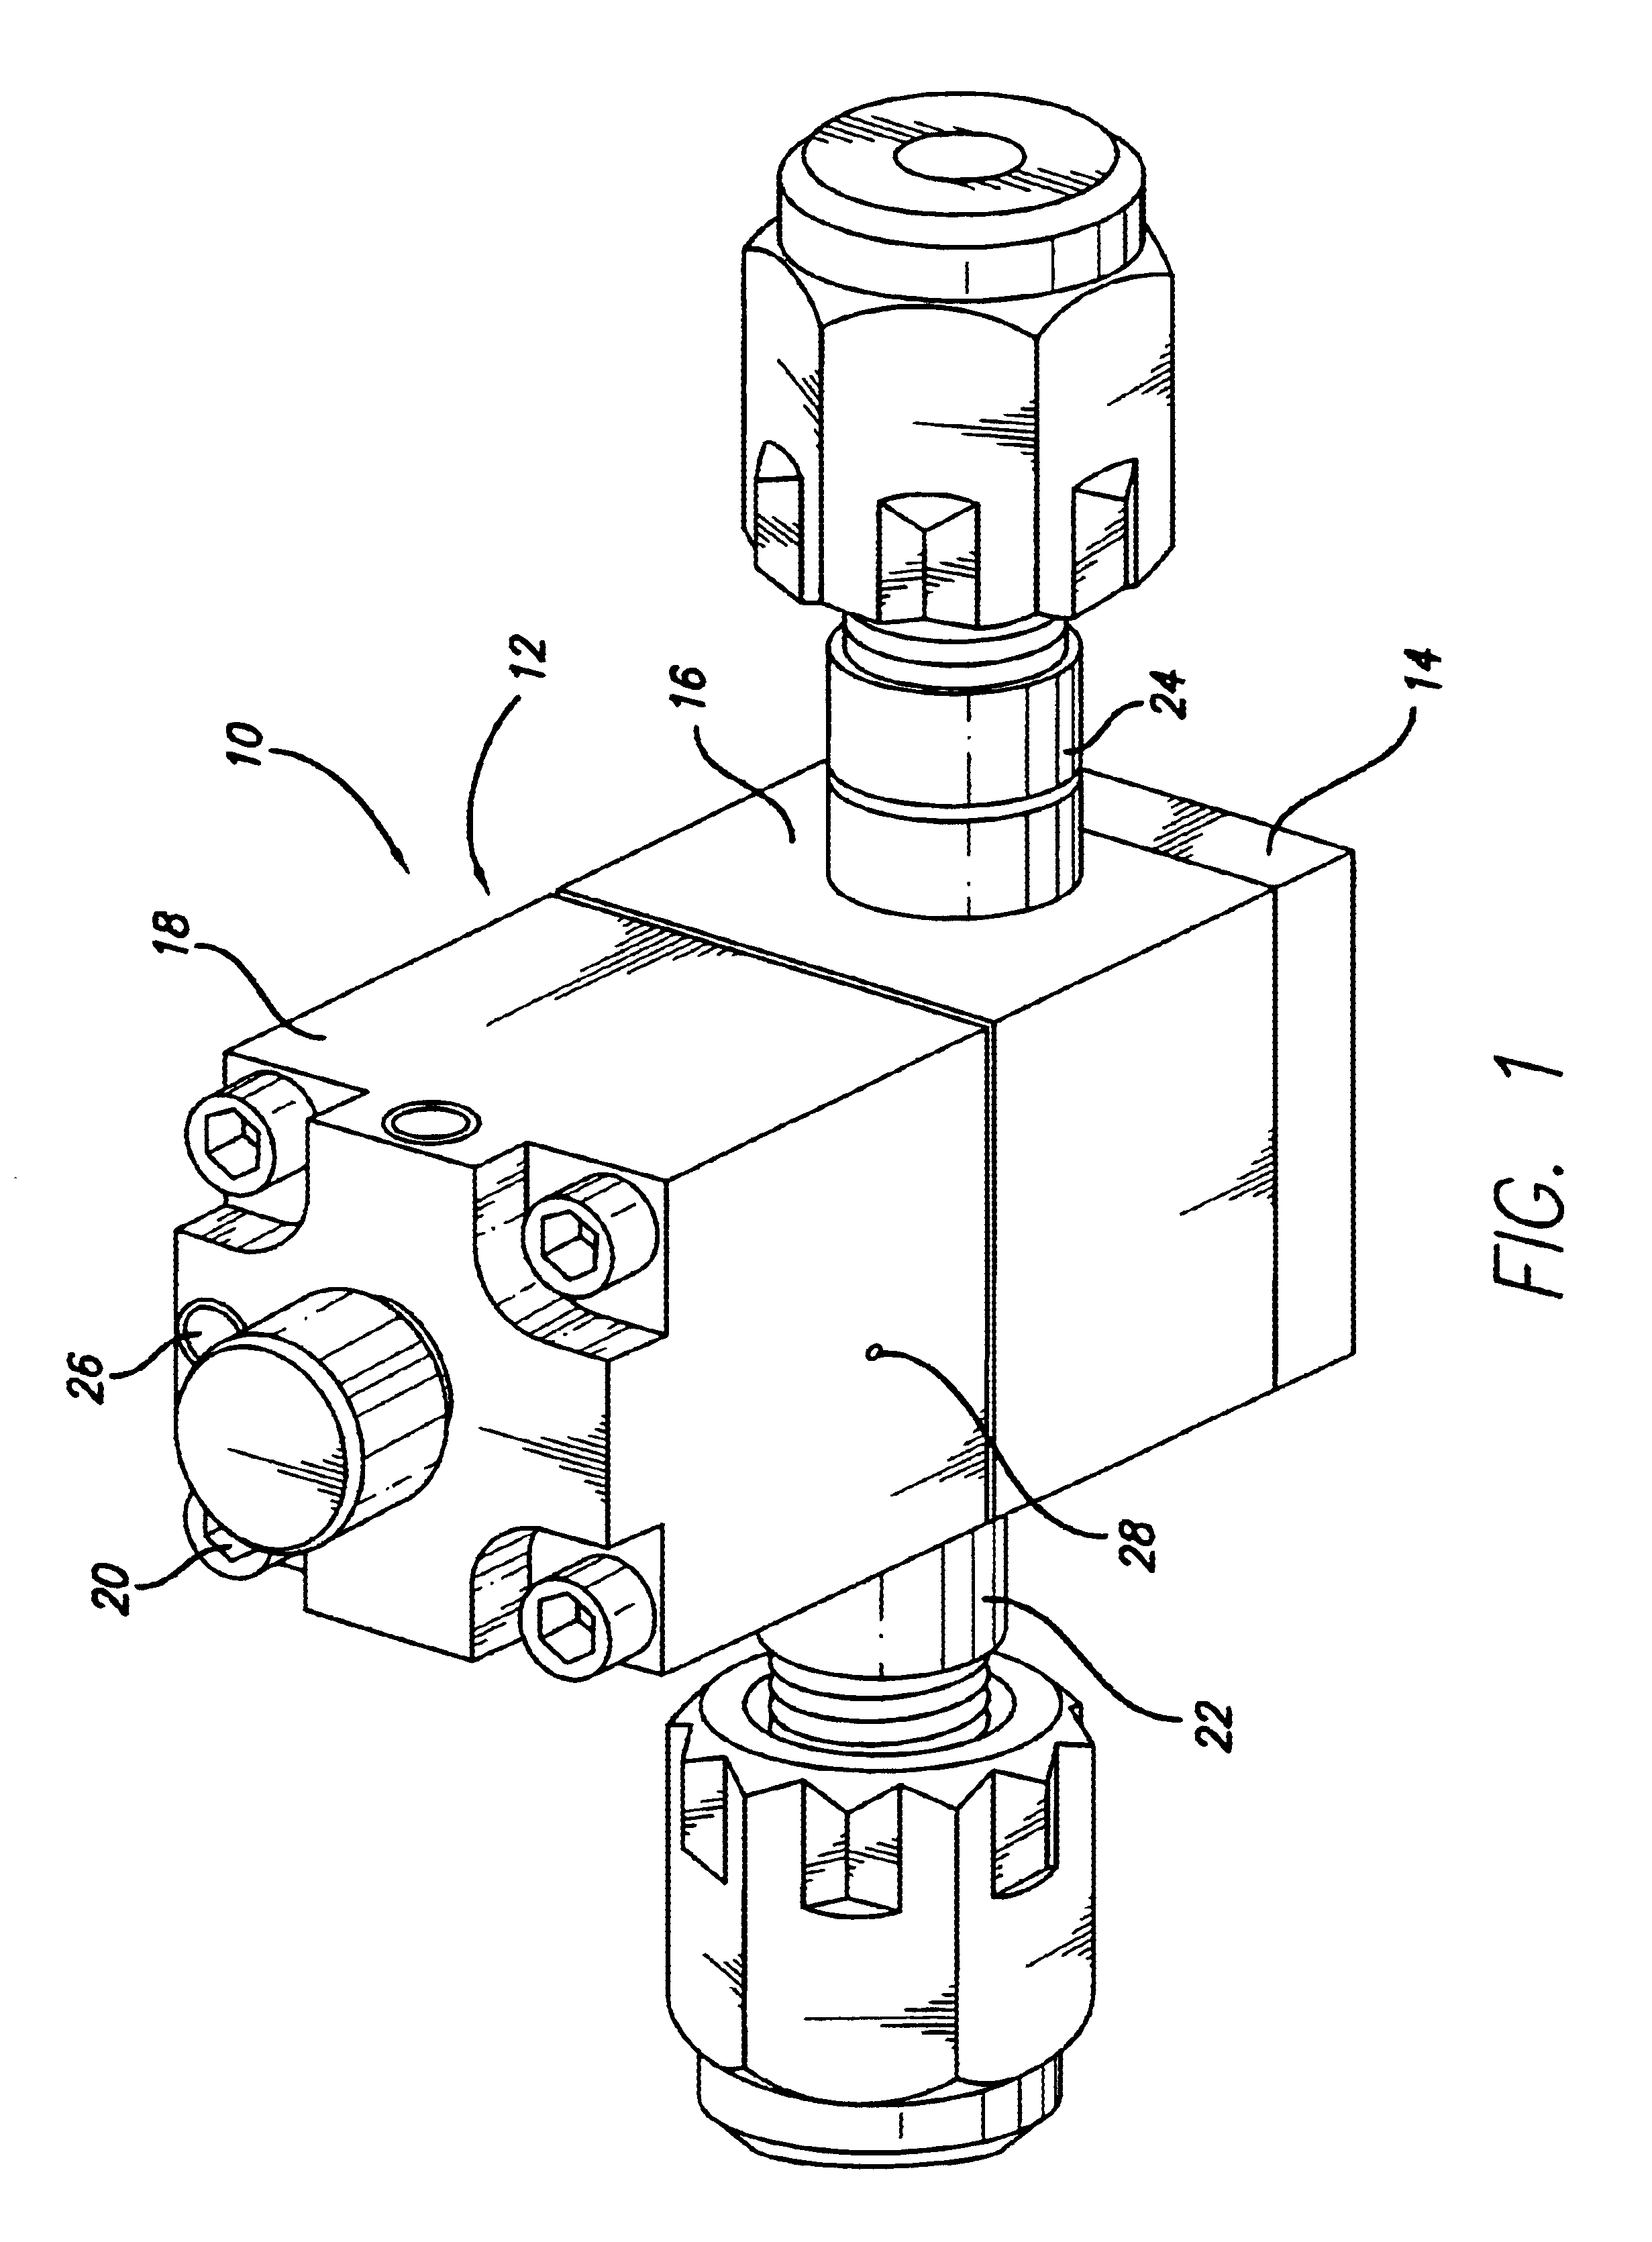 Anti-pumping dispense valve